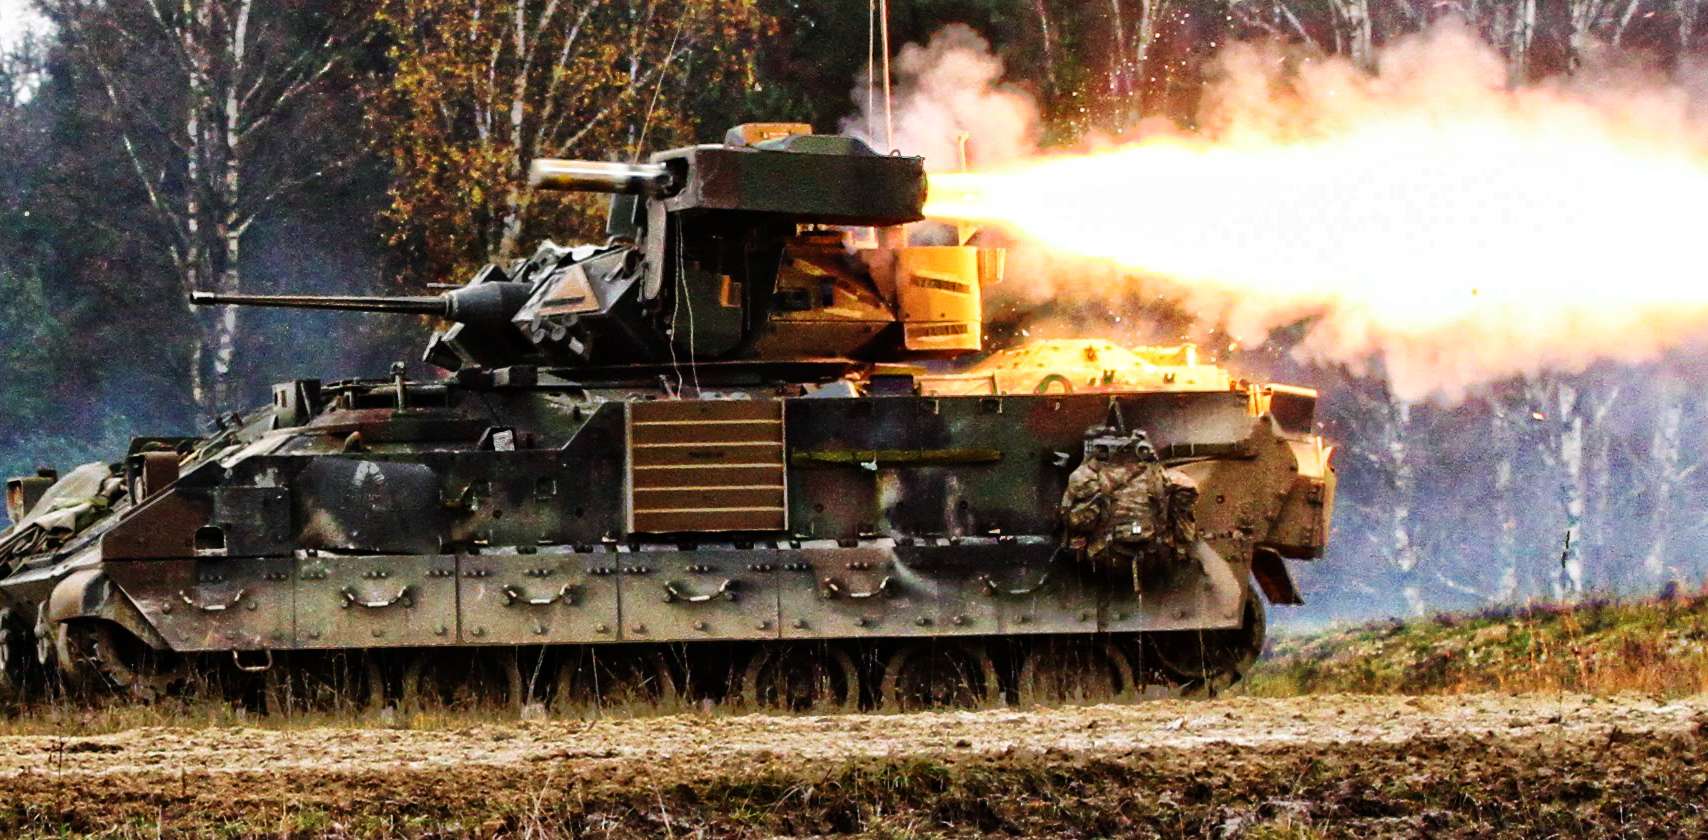 M2 Bradley firing TOW missile